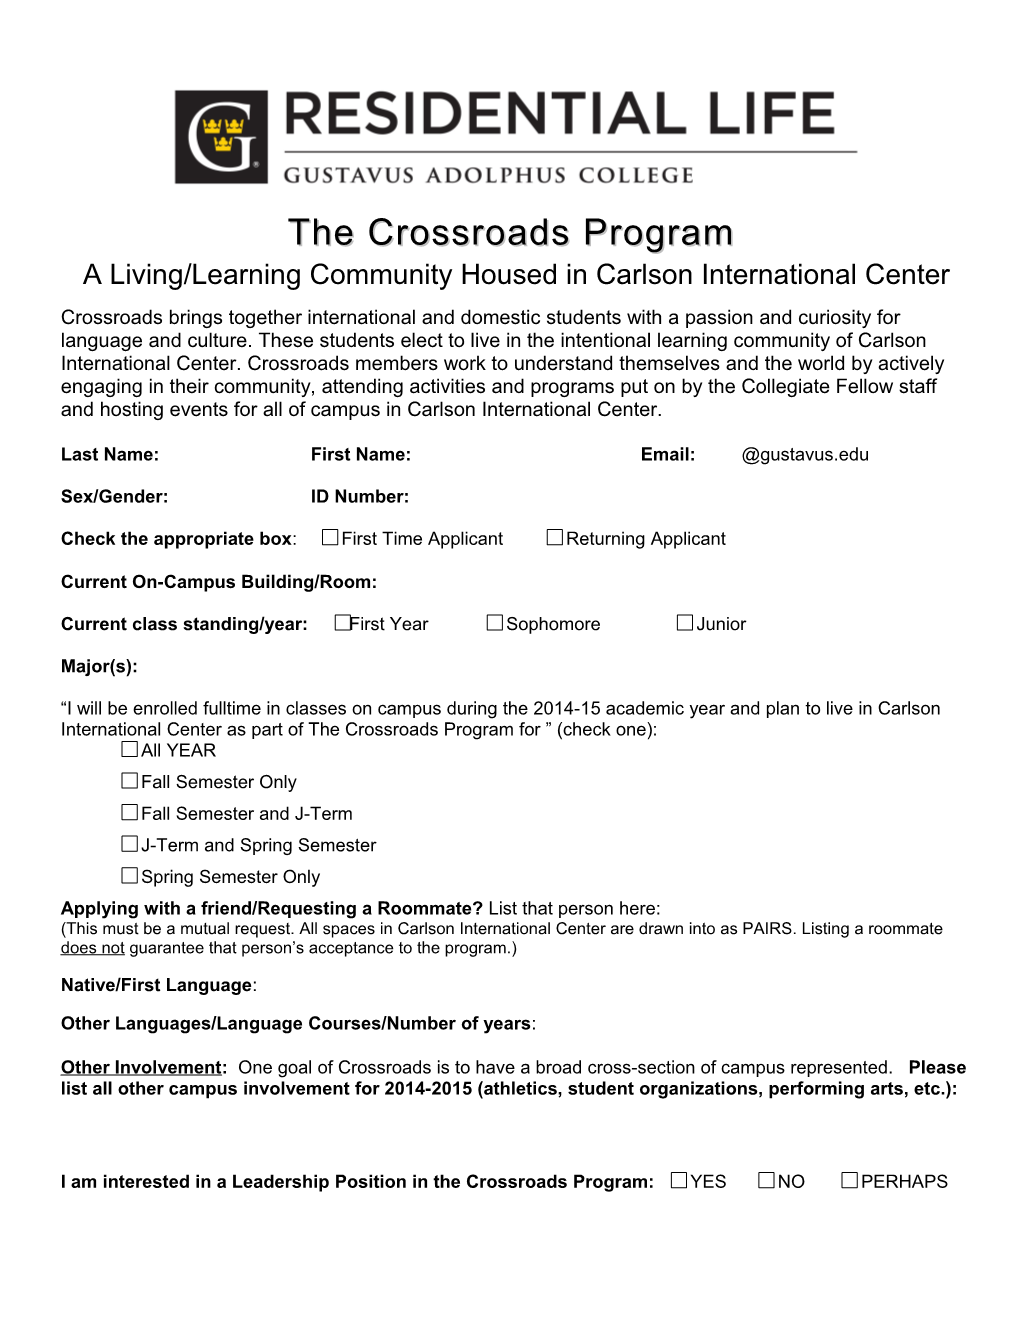 Crossroads Program Application